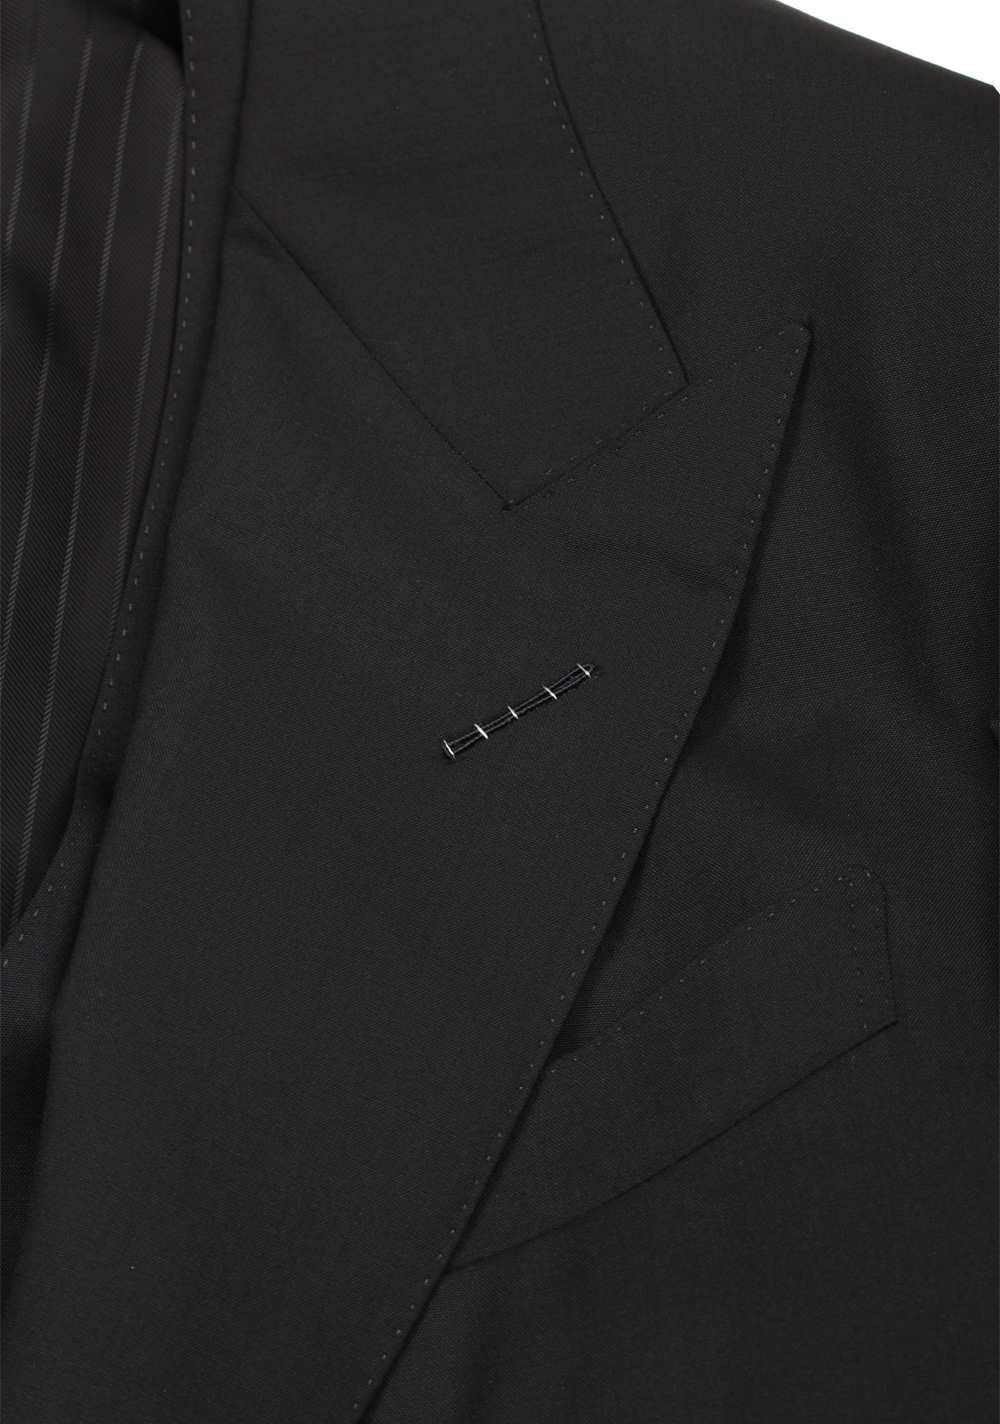 TOM FORD Windsor Black 3 Piece Suit Size 48 / 38R U.S. Wool Fit A | Costume Limité